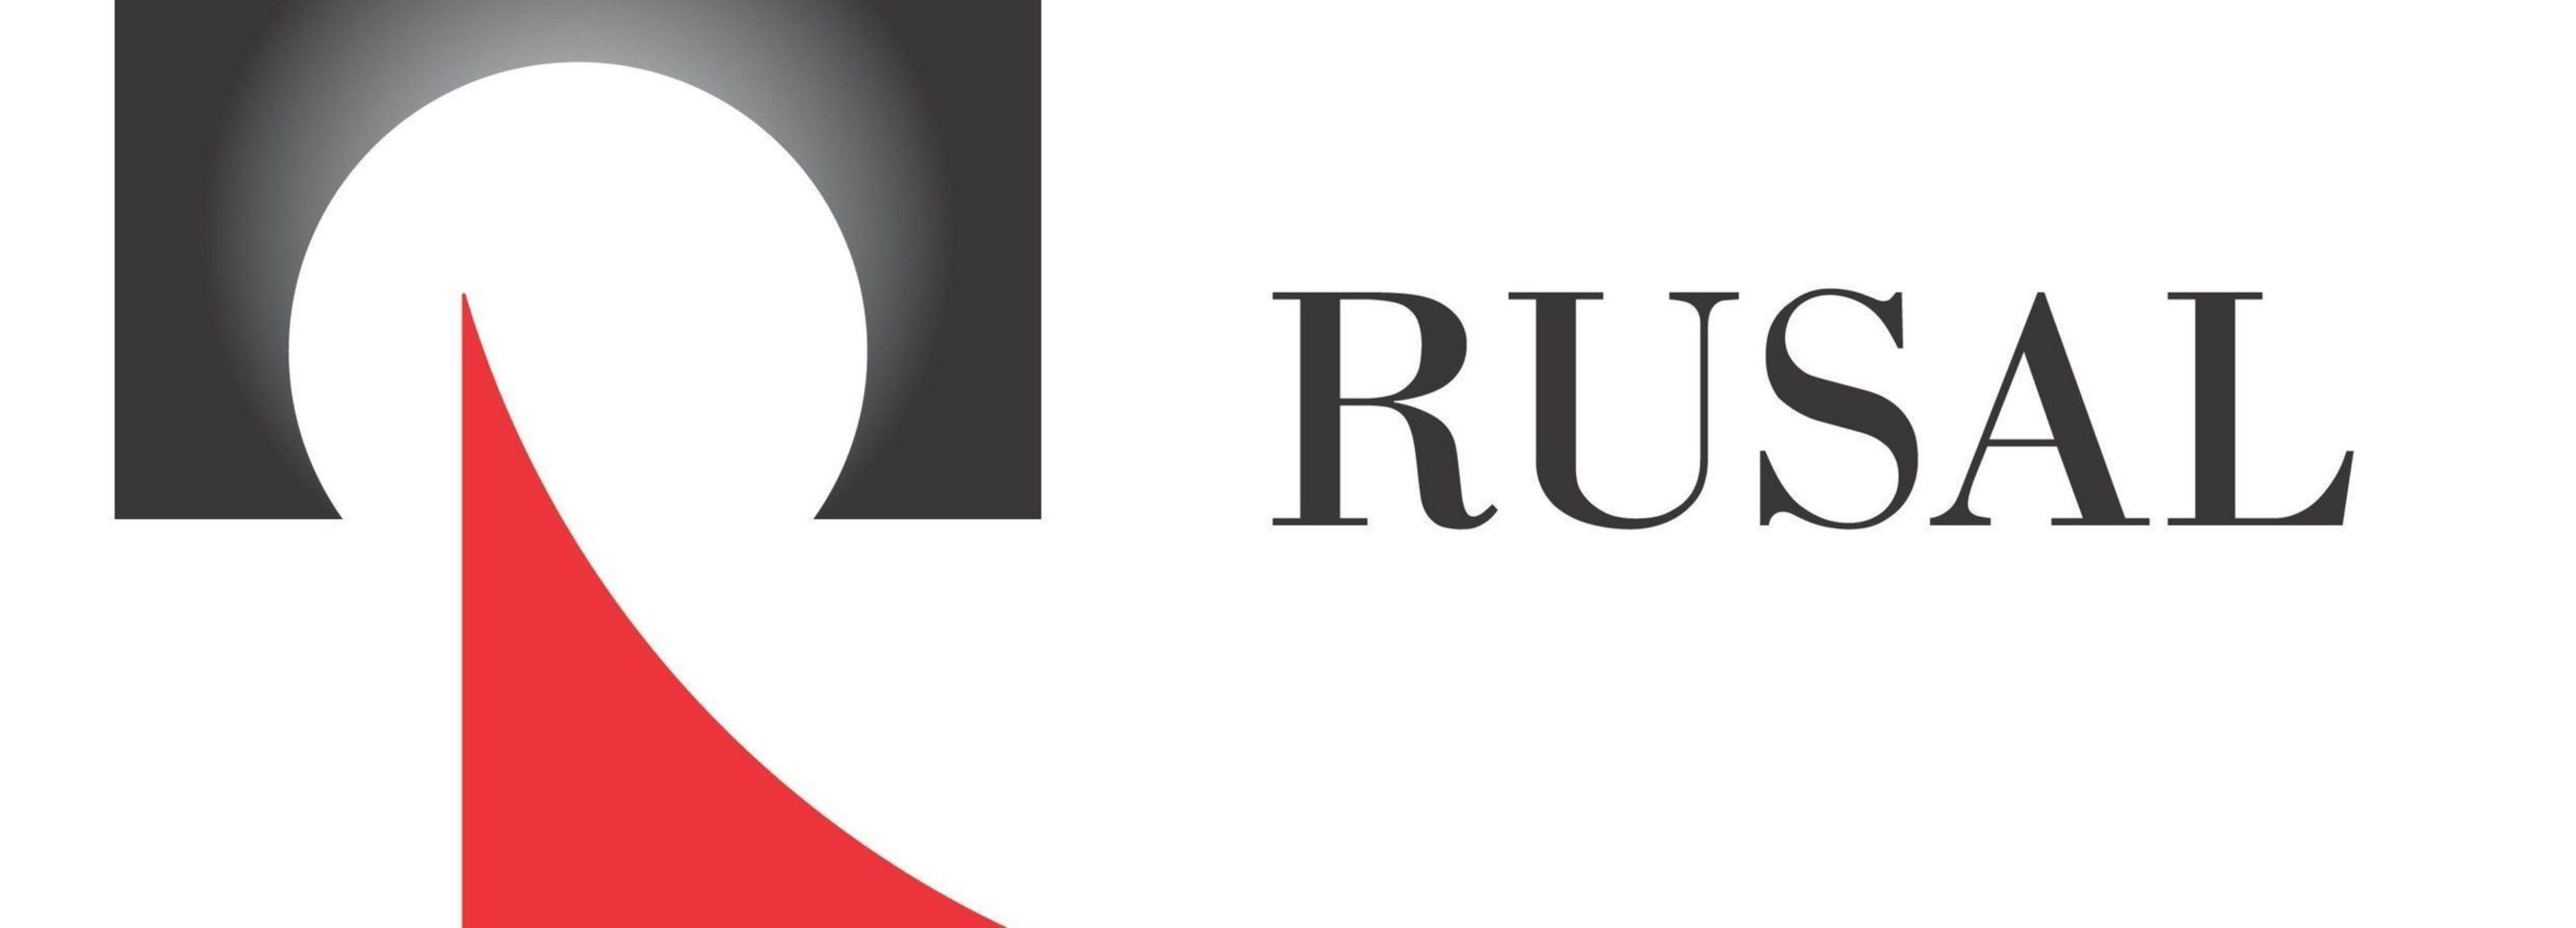 UC RUSAL Logo (PRNewsFoto/UC RUSAL)